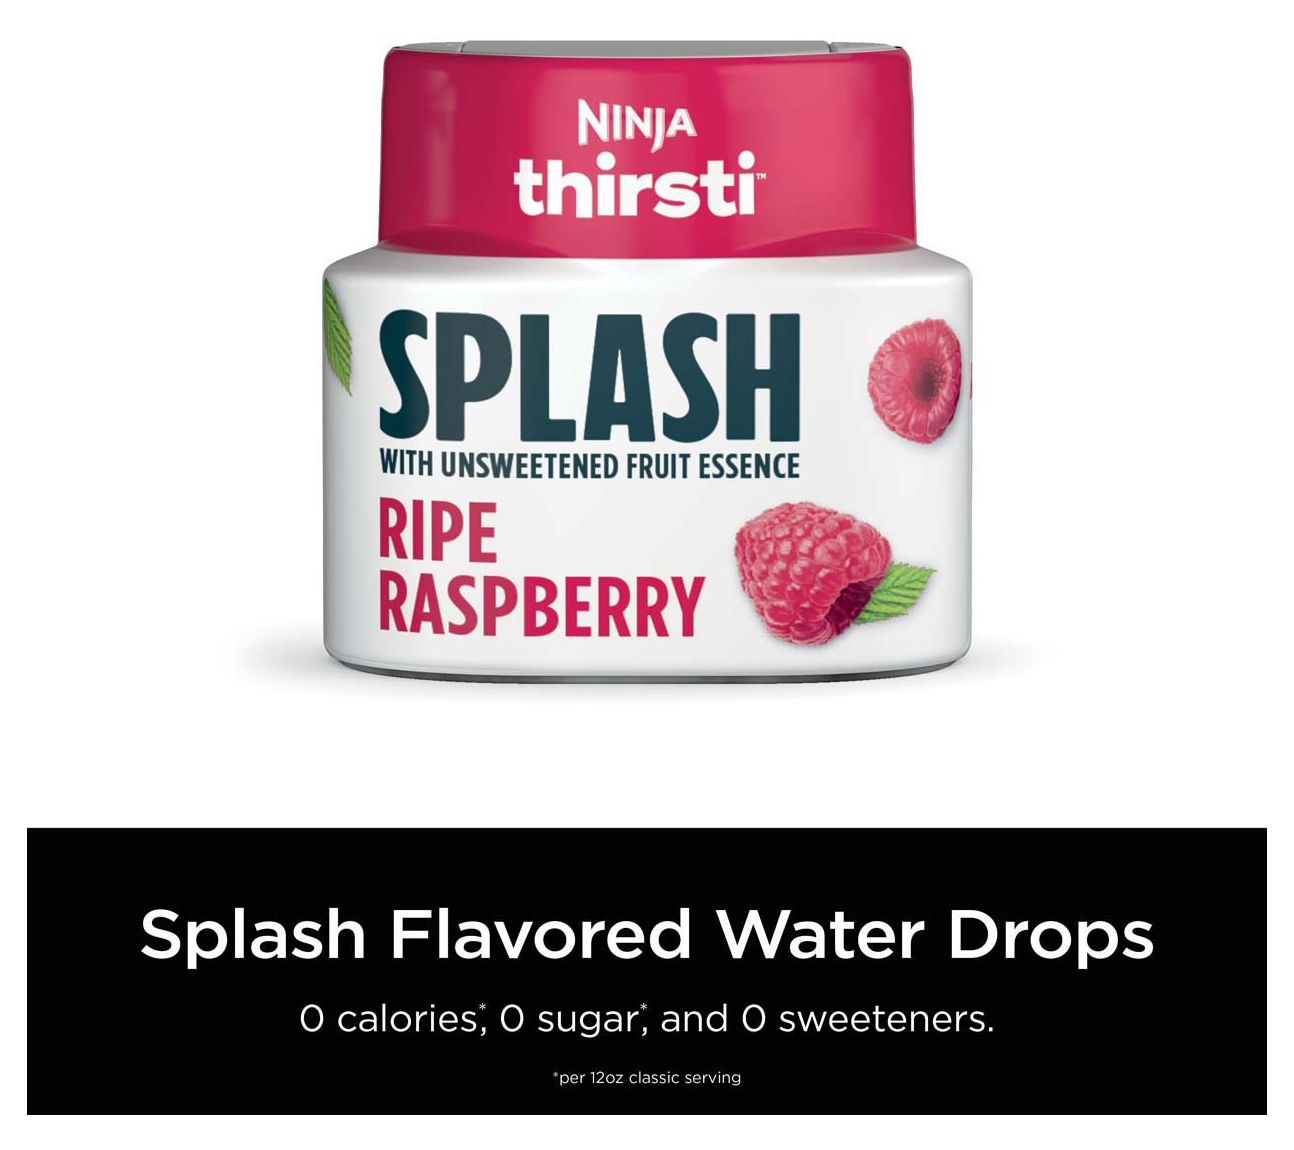 Ninja Thirsti SPLASH Flavored Water Drops - Unsweetened 